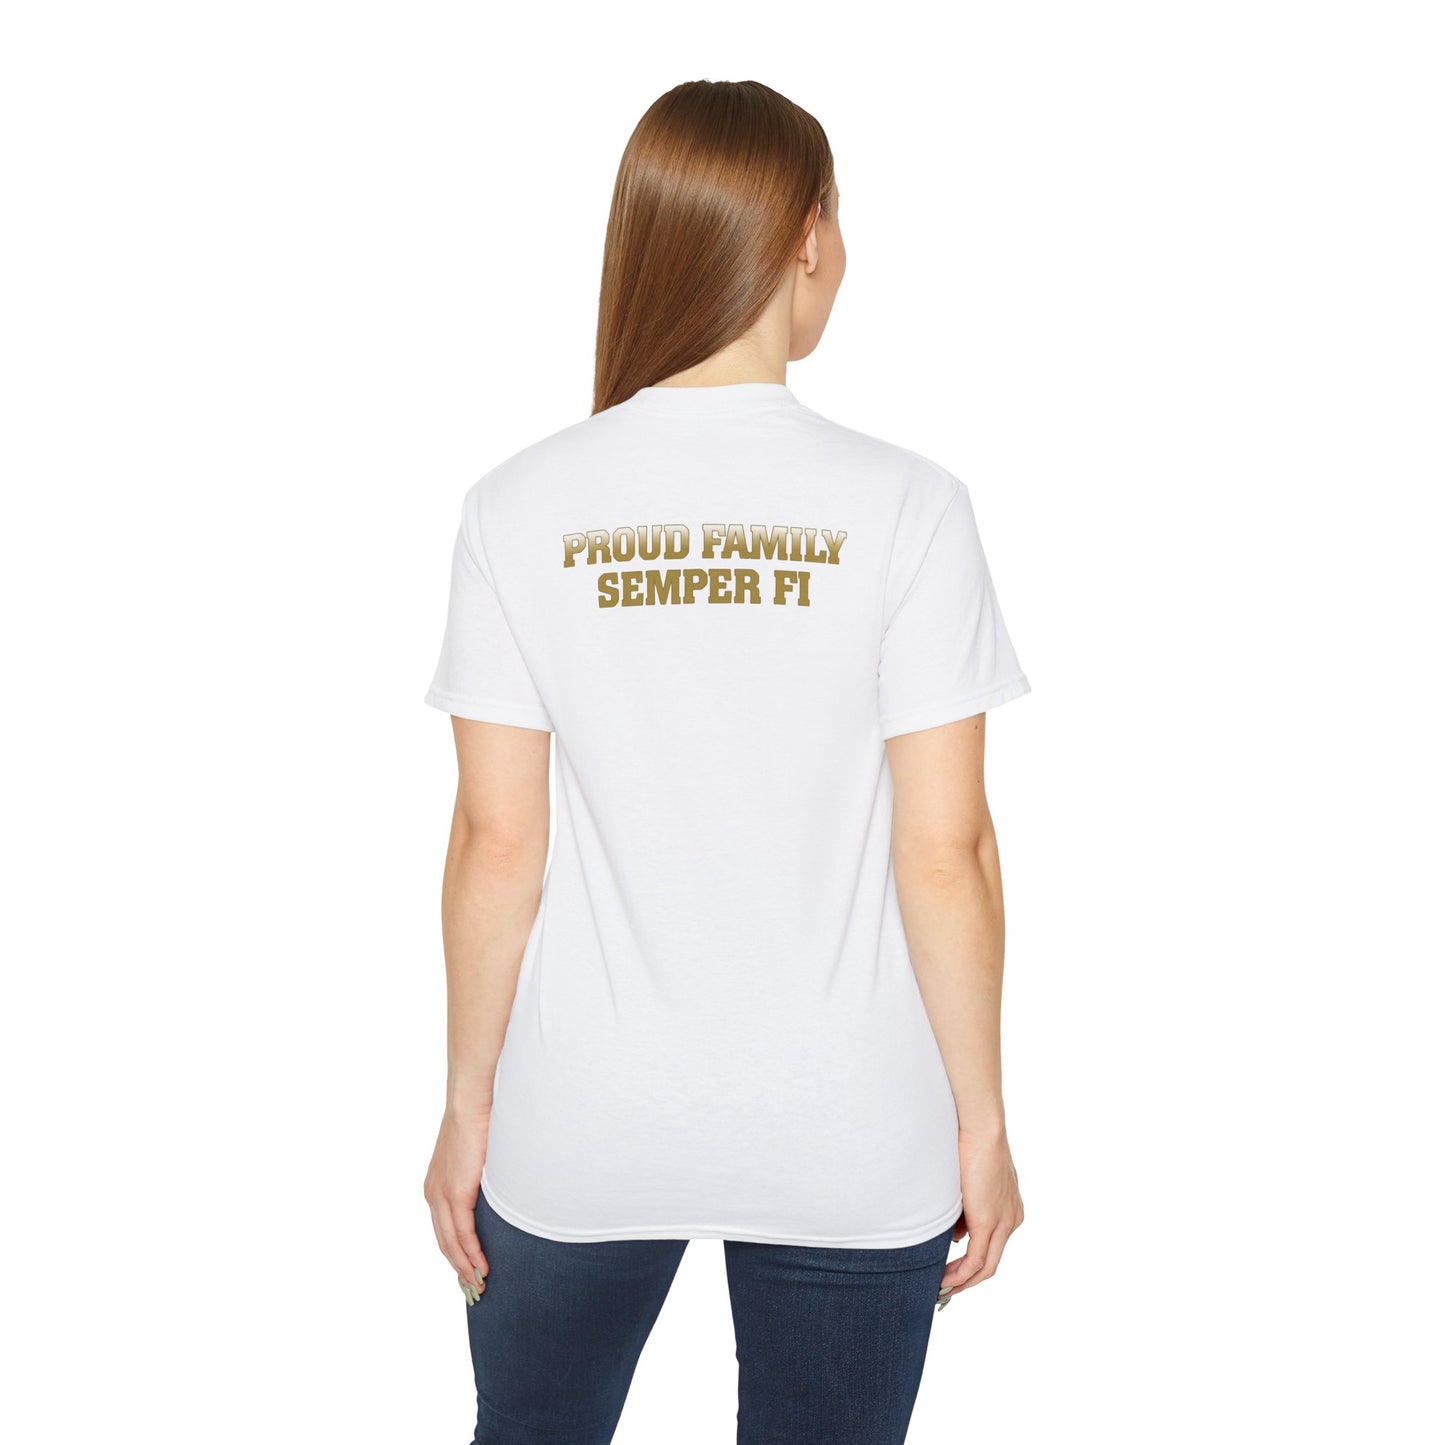 T-Shirt: Lima Co. MCRD Parris Island (EGA + Back Proud Family)